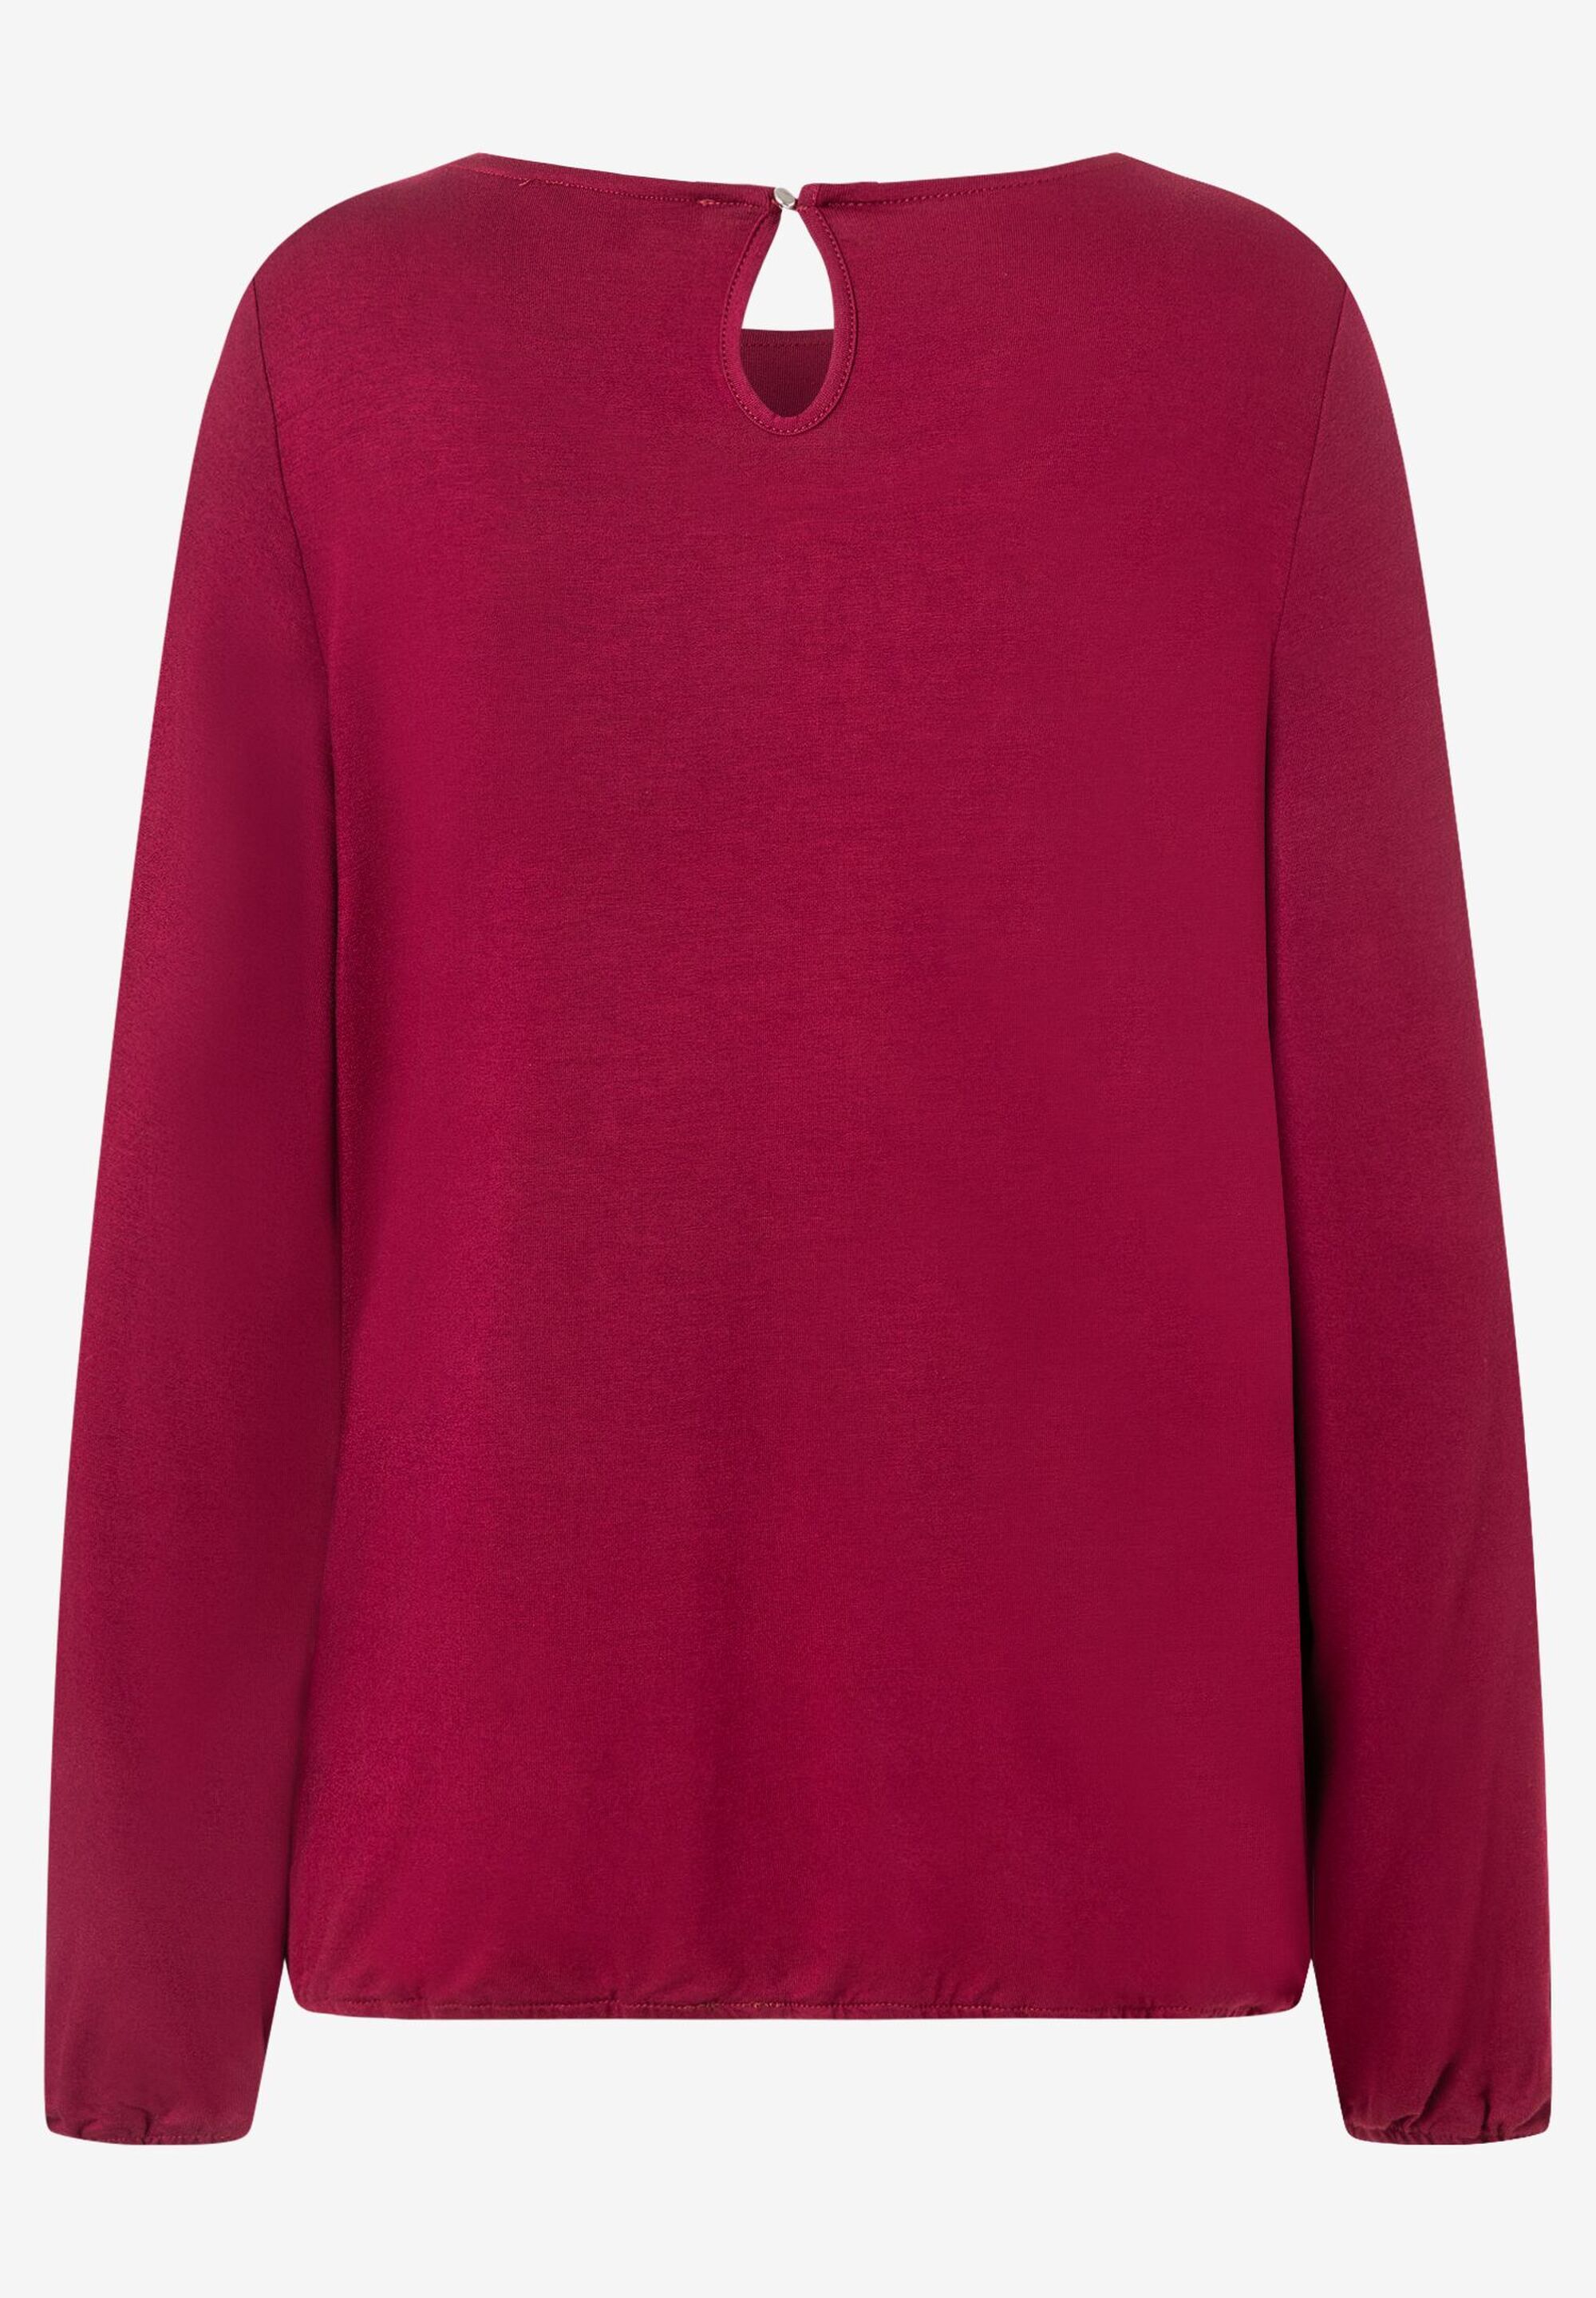 Blusenshirt, burgundy, Herbst-Kollektion | Der offizielle MORE & MORE  Onlineshop